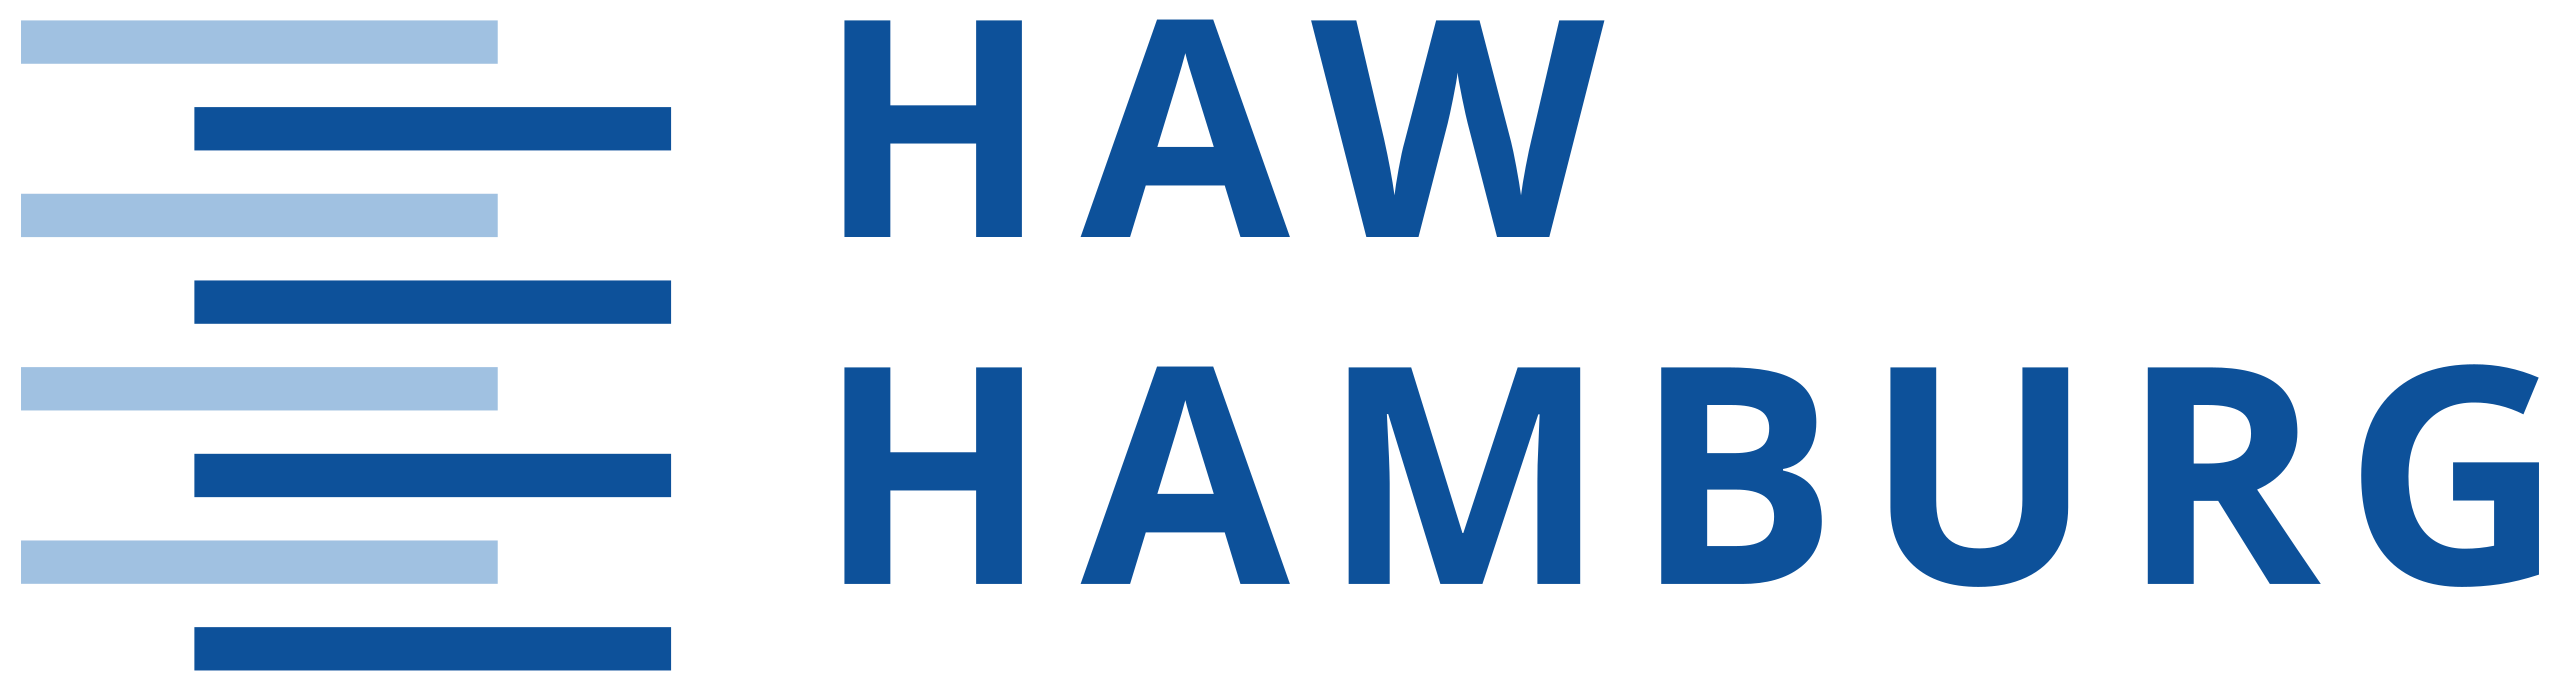 HAW-logo